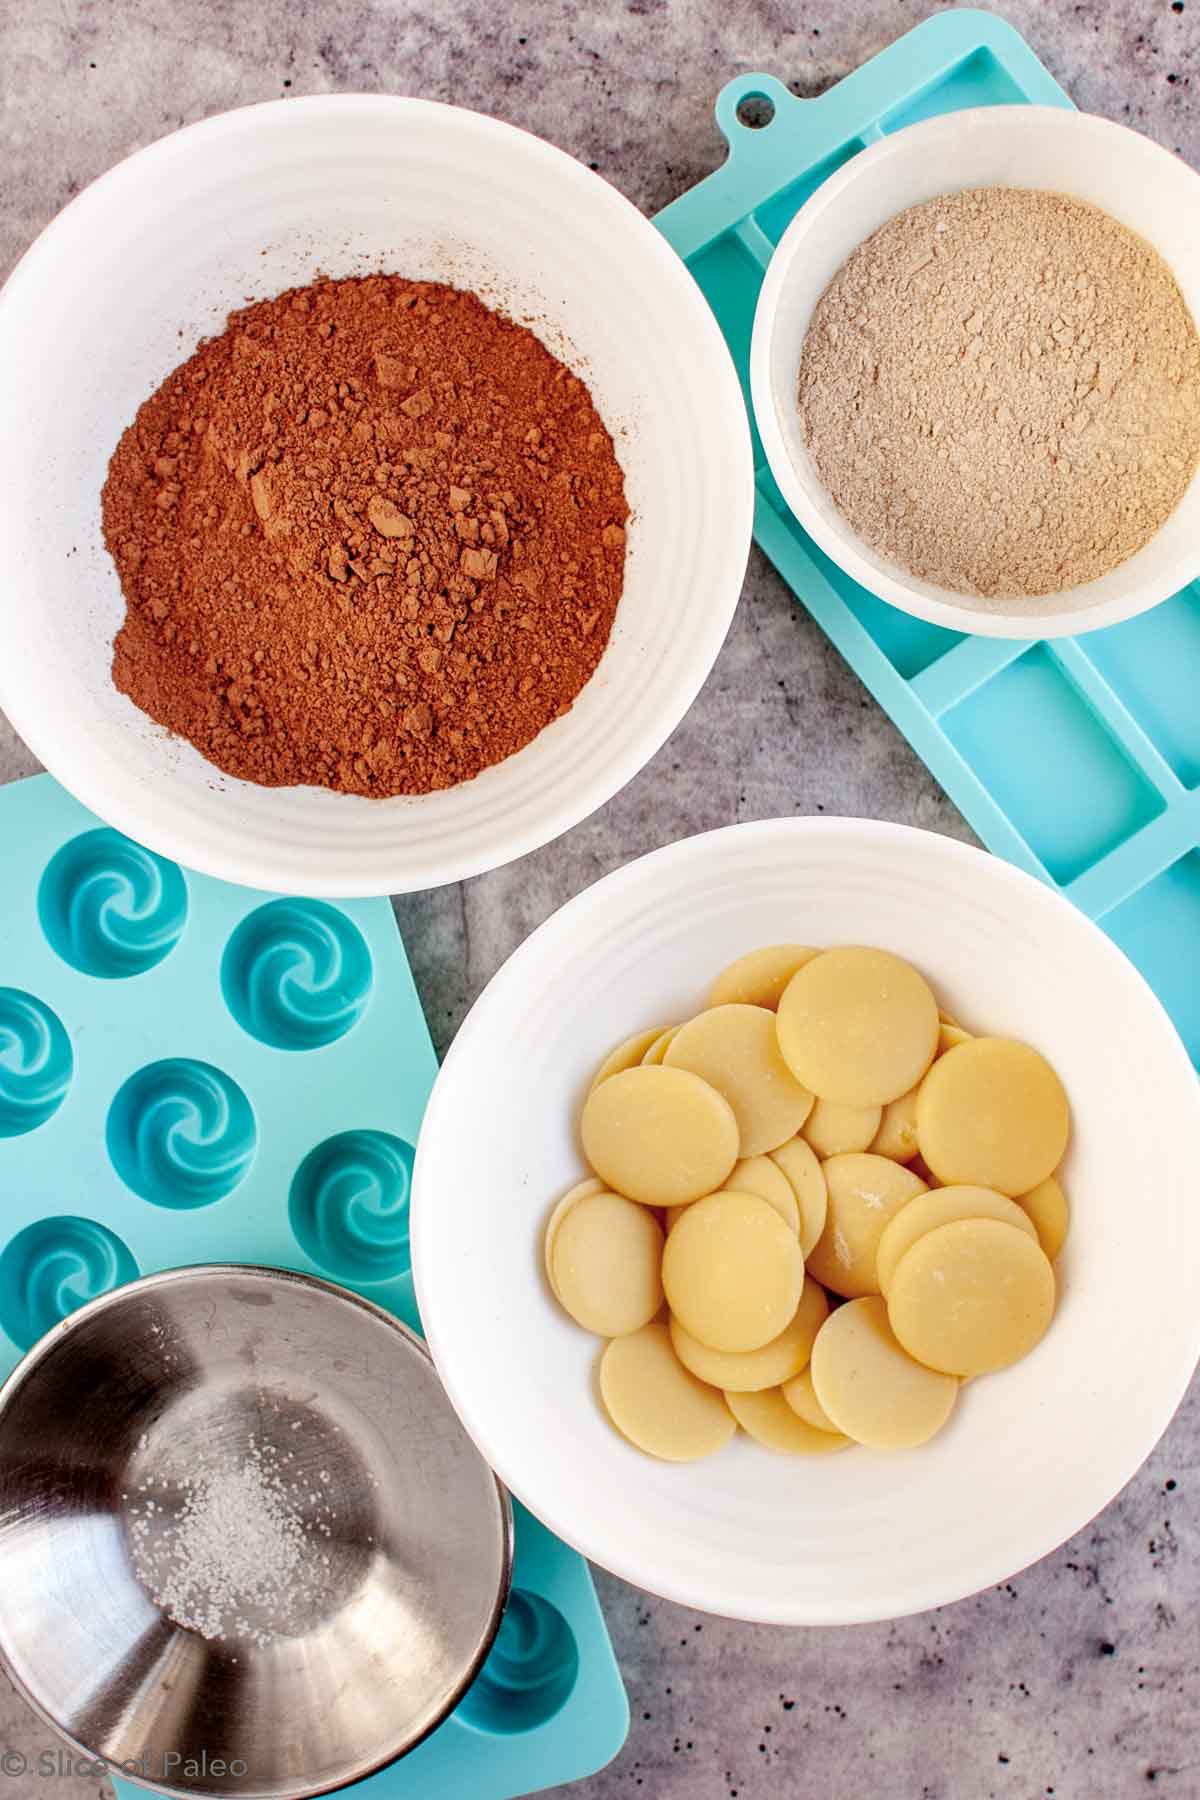 Homemade paleo chocolate ingredients